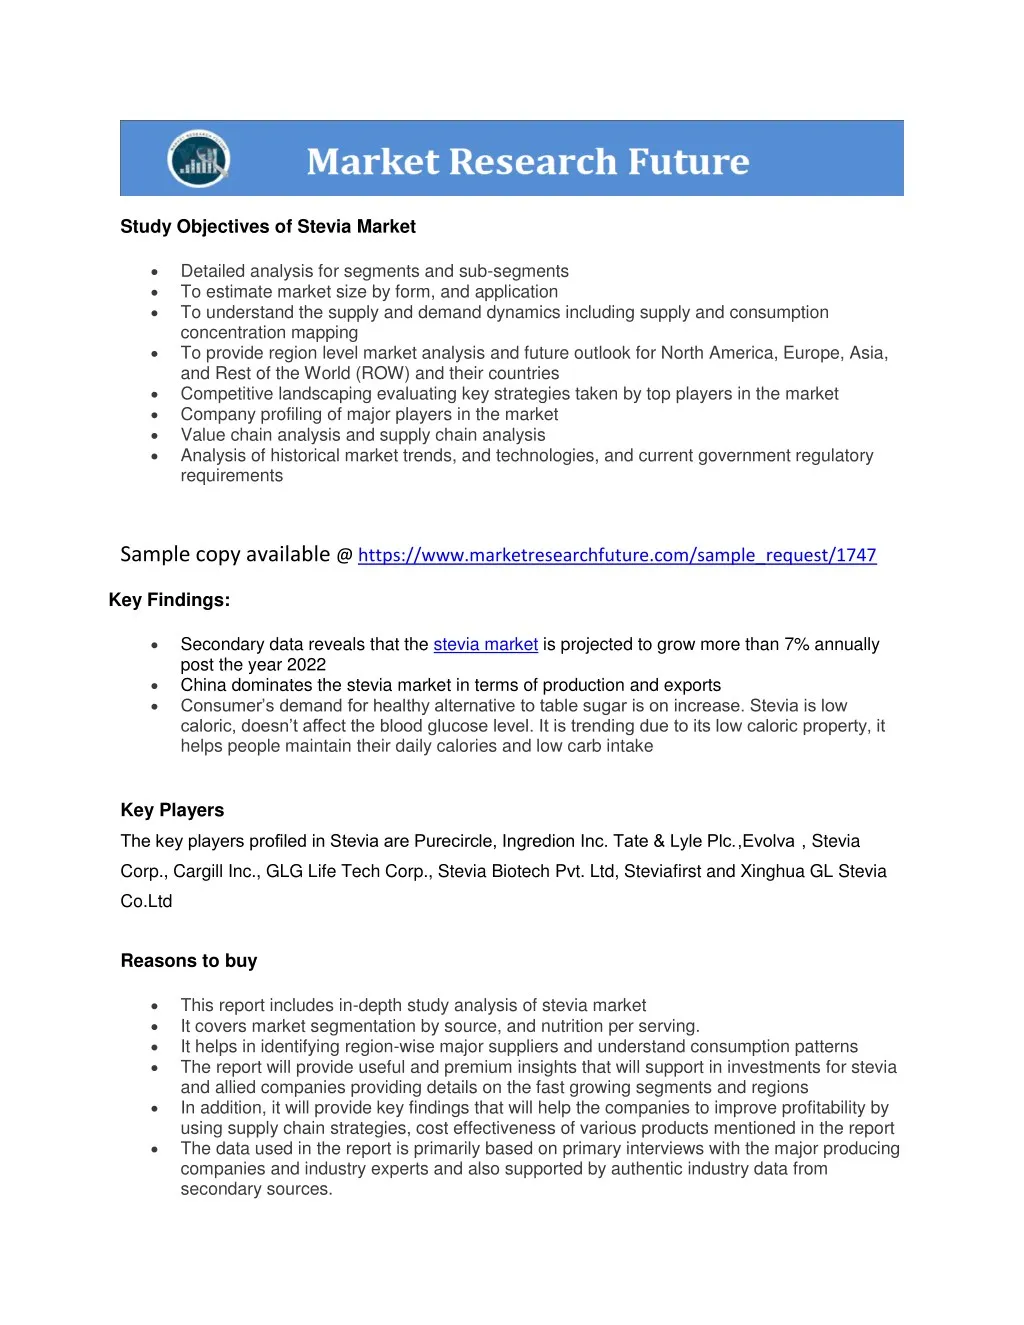 study objectives of stevia market